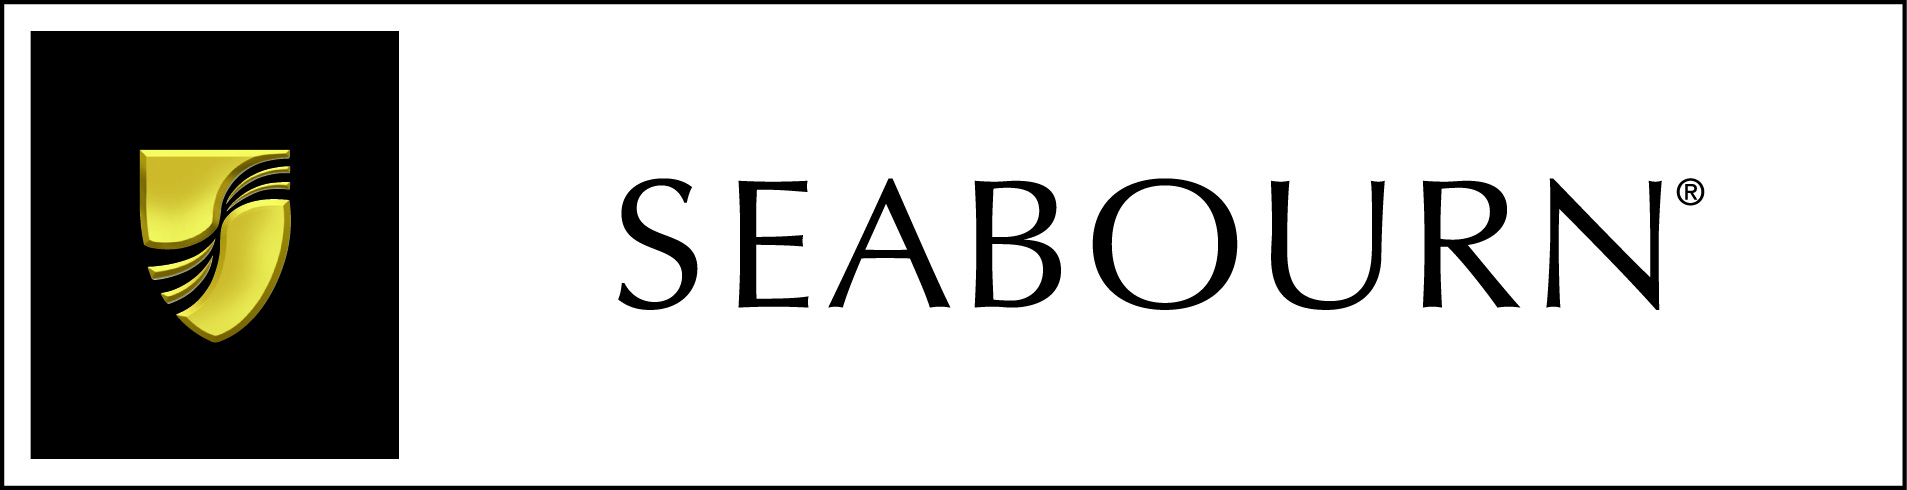 seabourn_logo